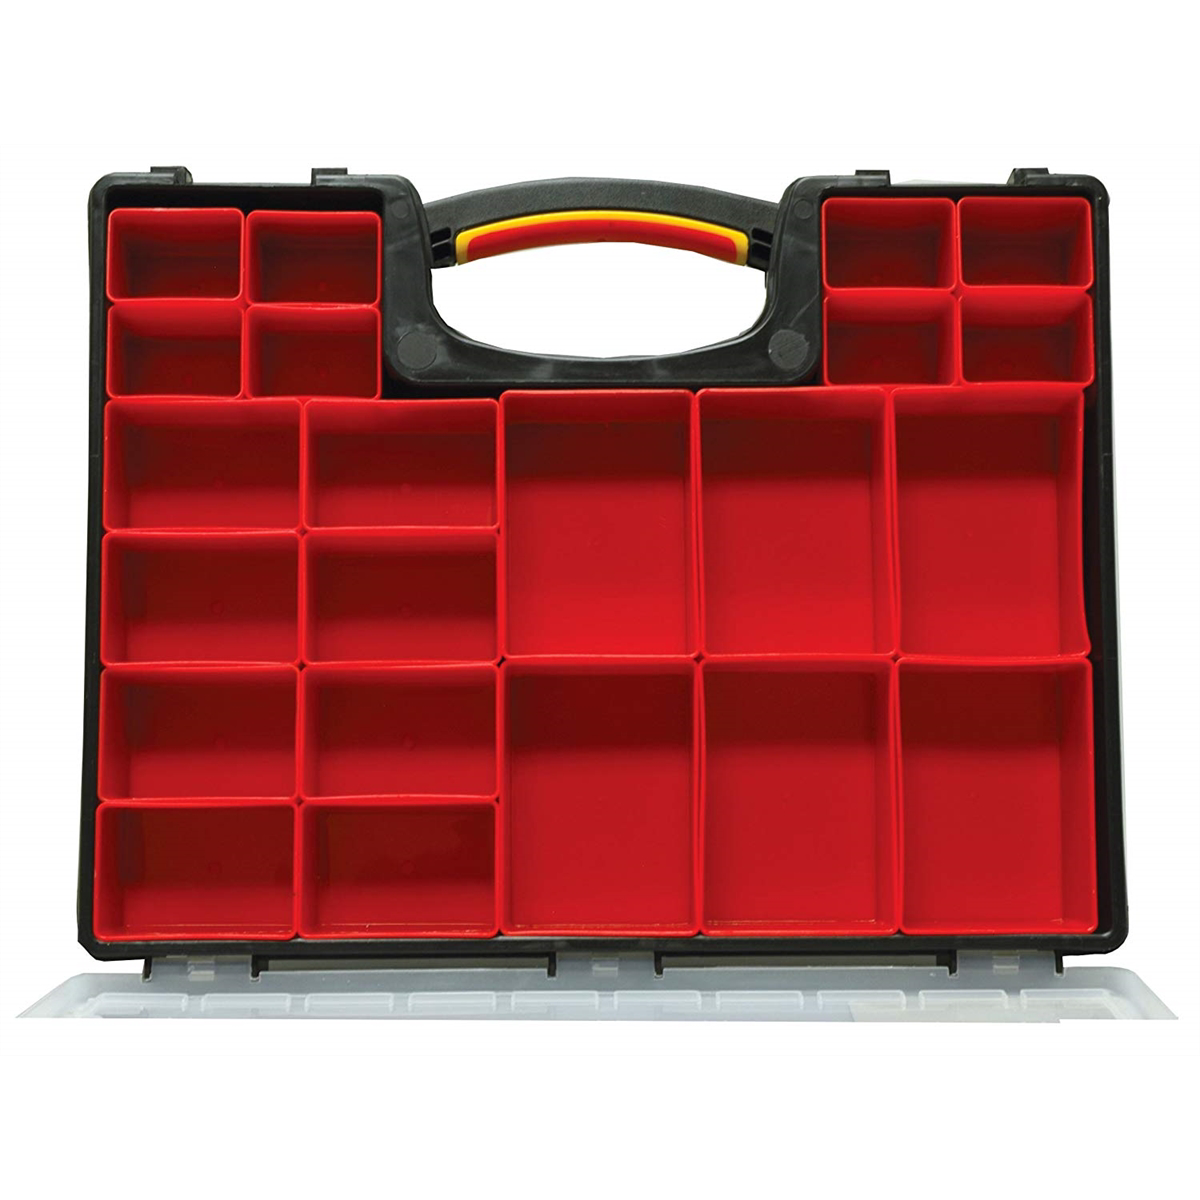 12 Bin Portable Plastic Organizer - Homak Manufacturing